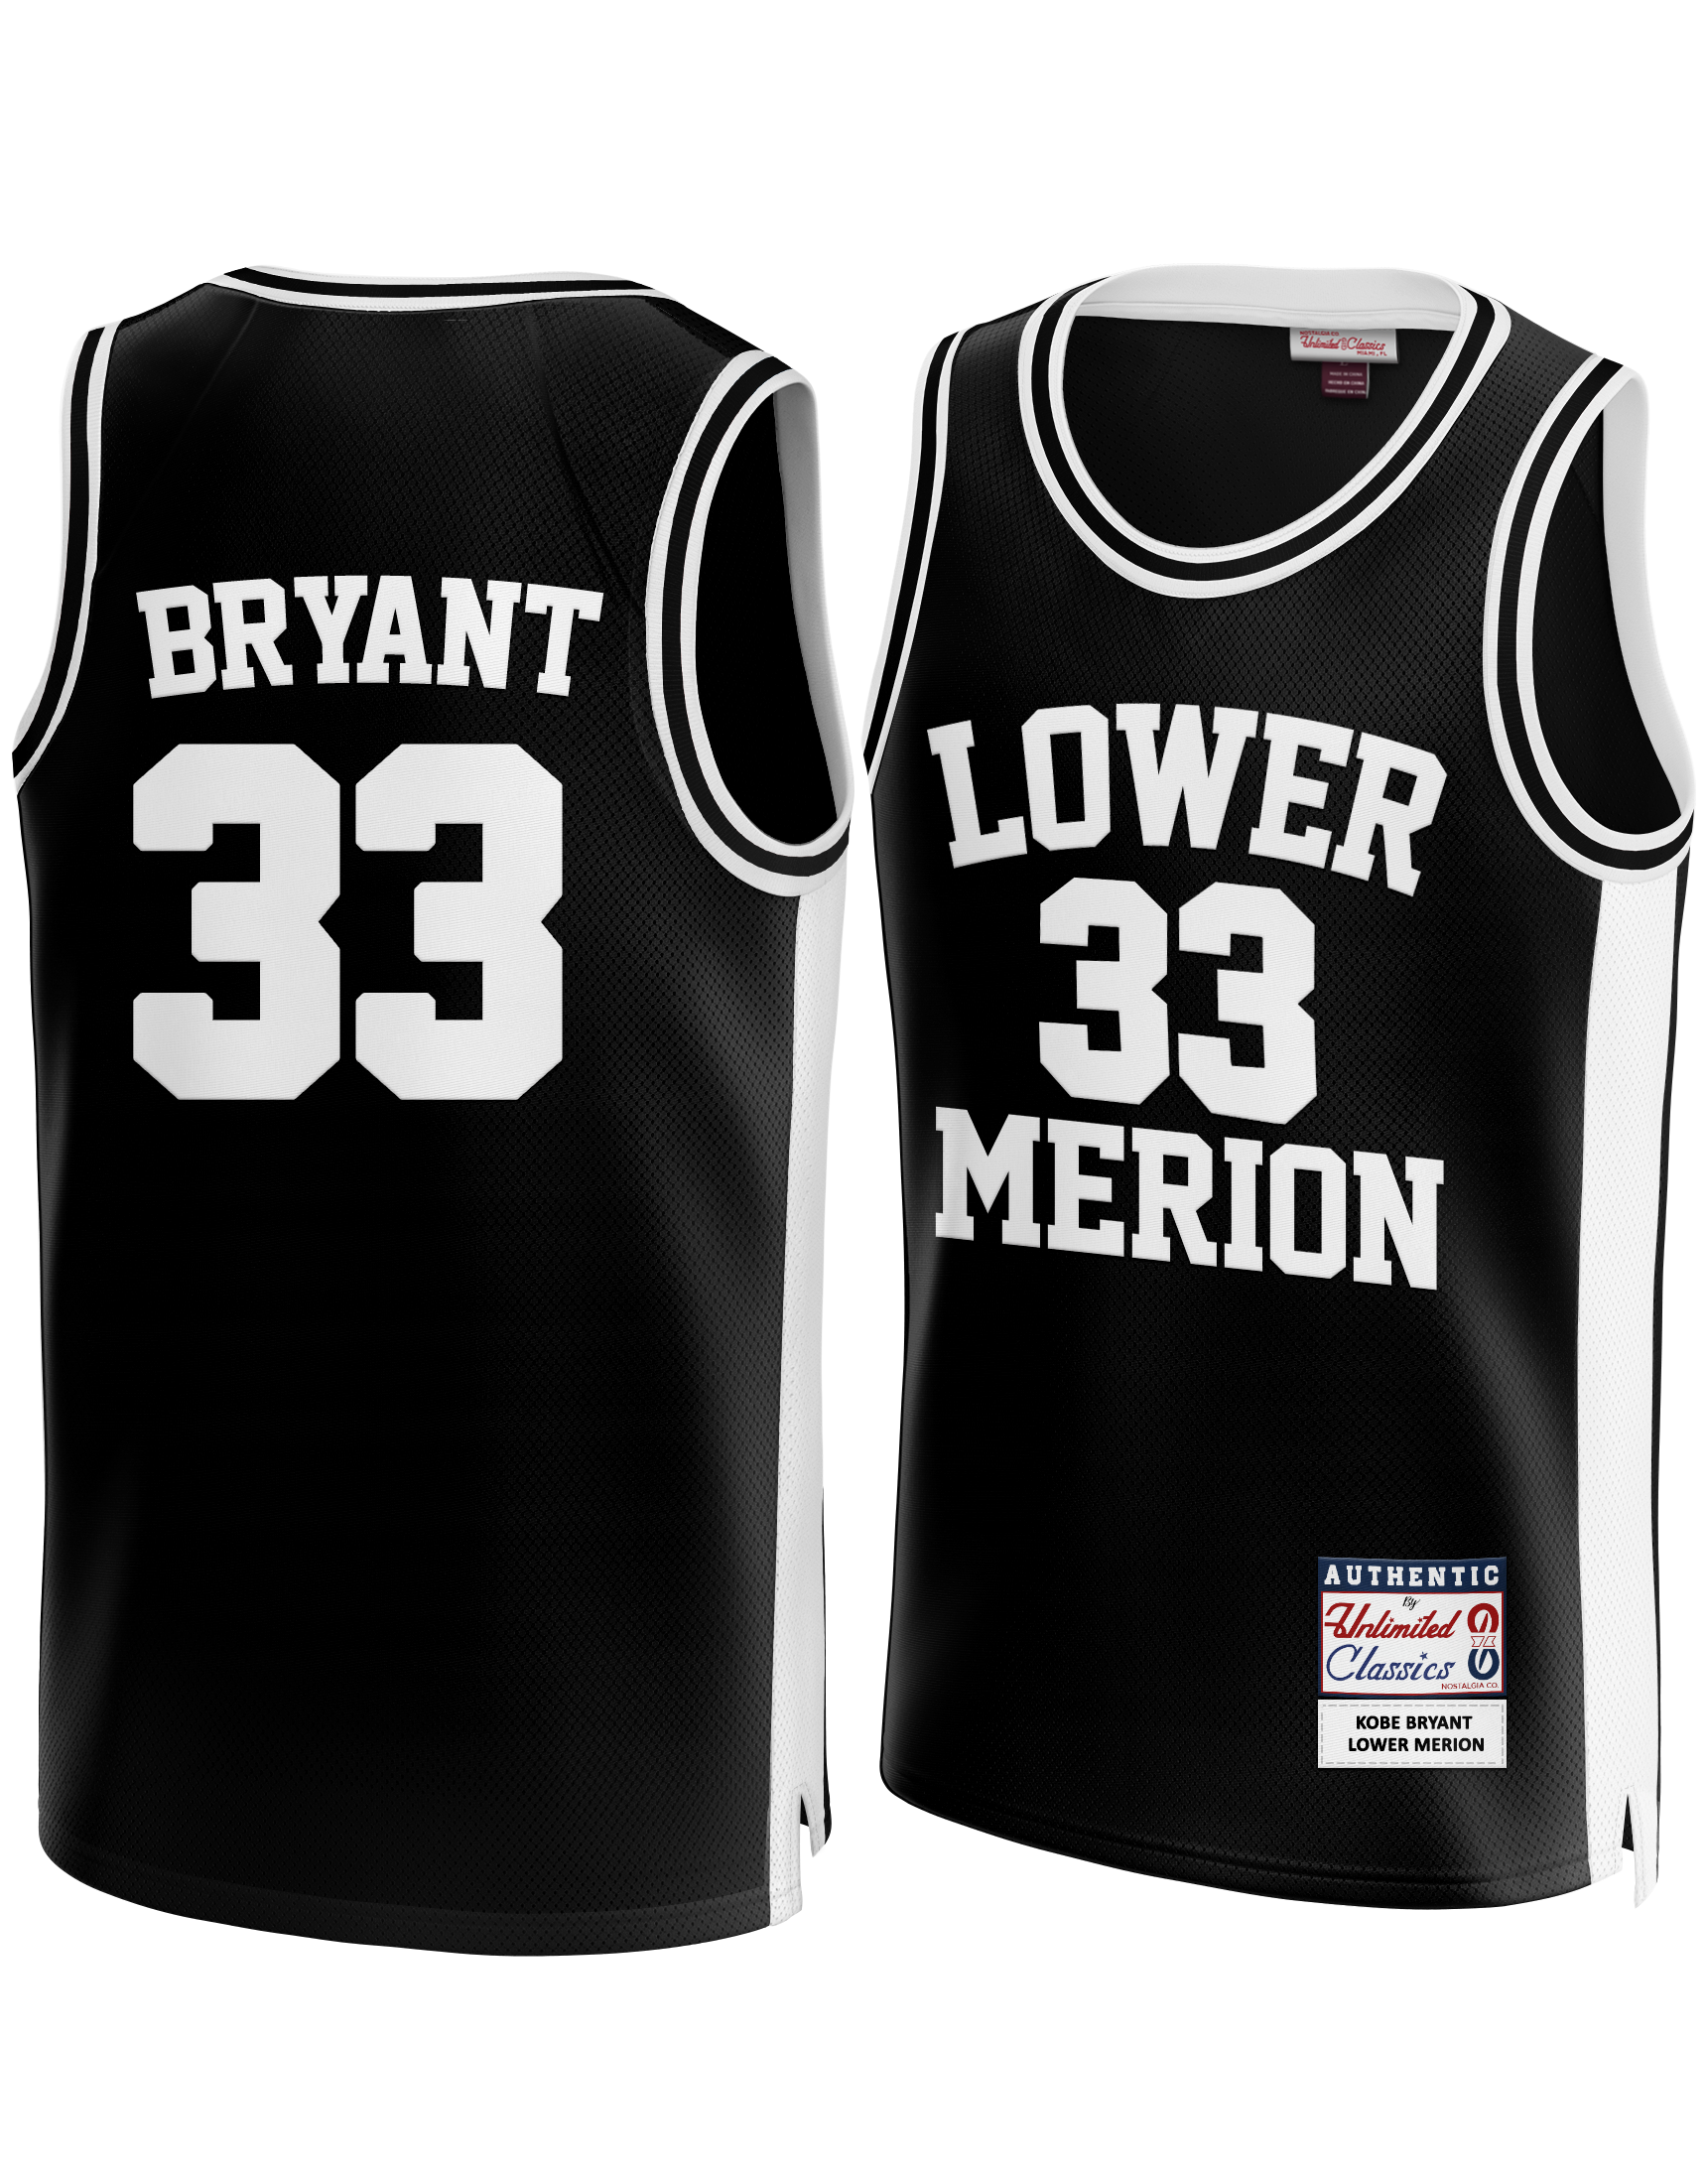 Kobe Bryant Black Jersey